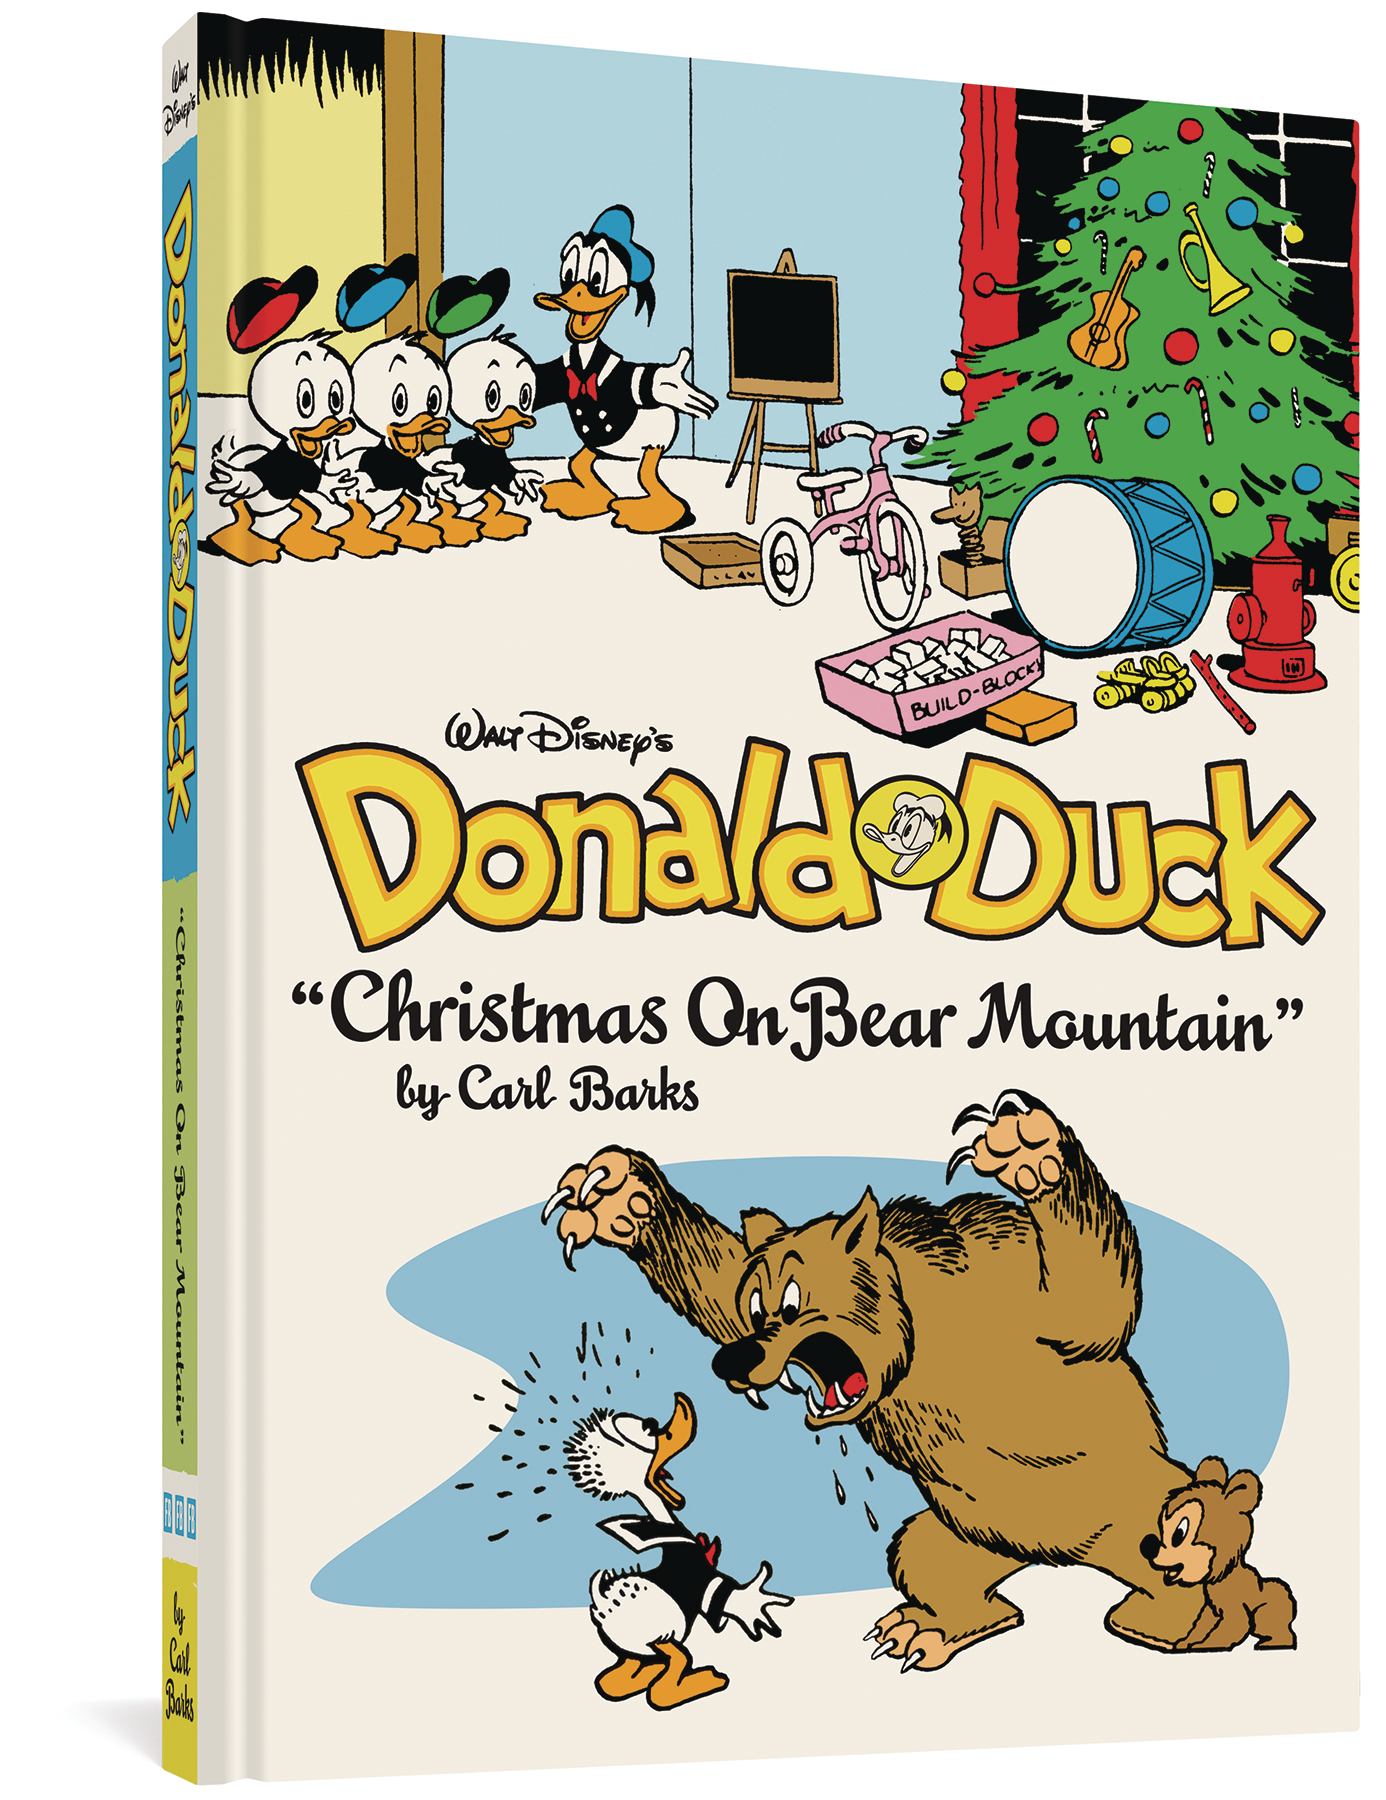 Complete Carl Barks Disney Library Hardcover Volume 5 Walt Disney's Donald Duck Christmas On Bear Mountain